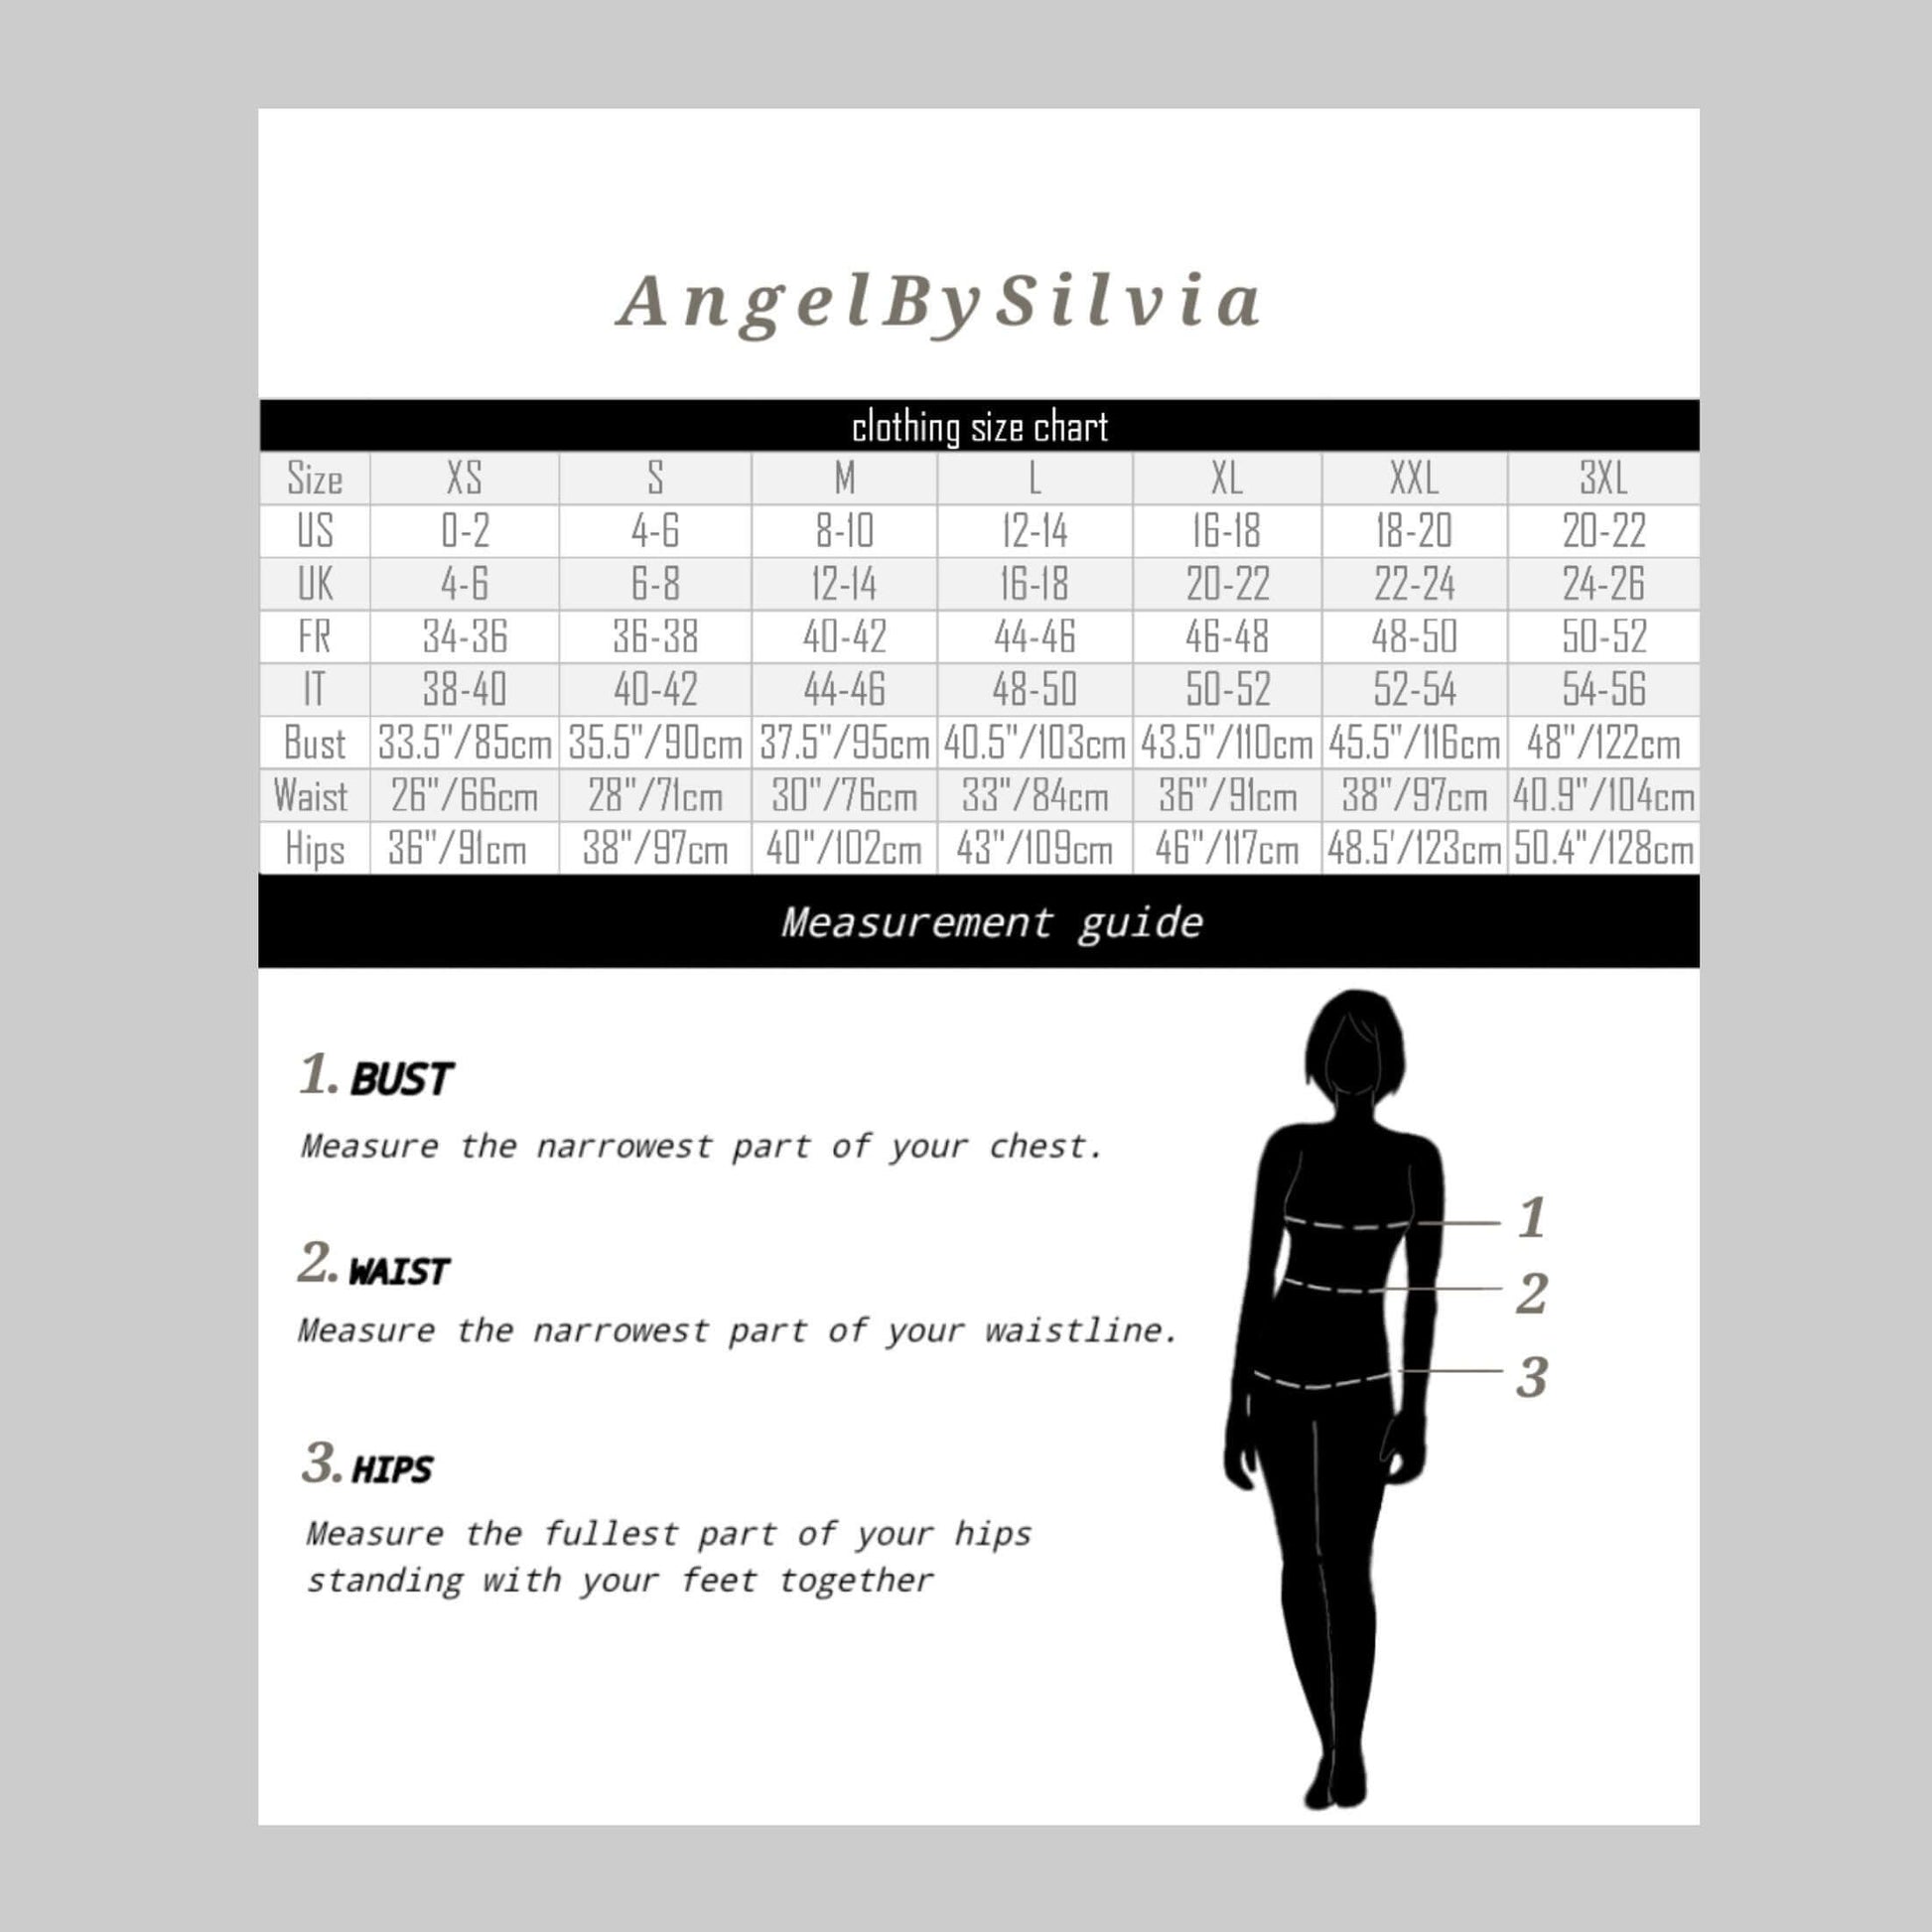 Extravagant Jumpsuit - Handmade clothing from AngelBySilvia - Top Designer Brands 